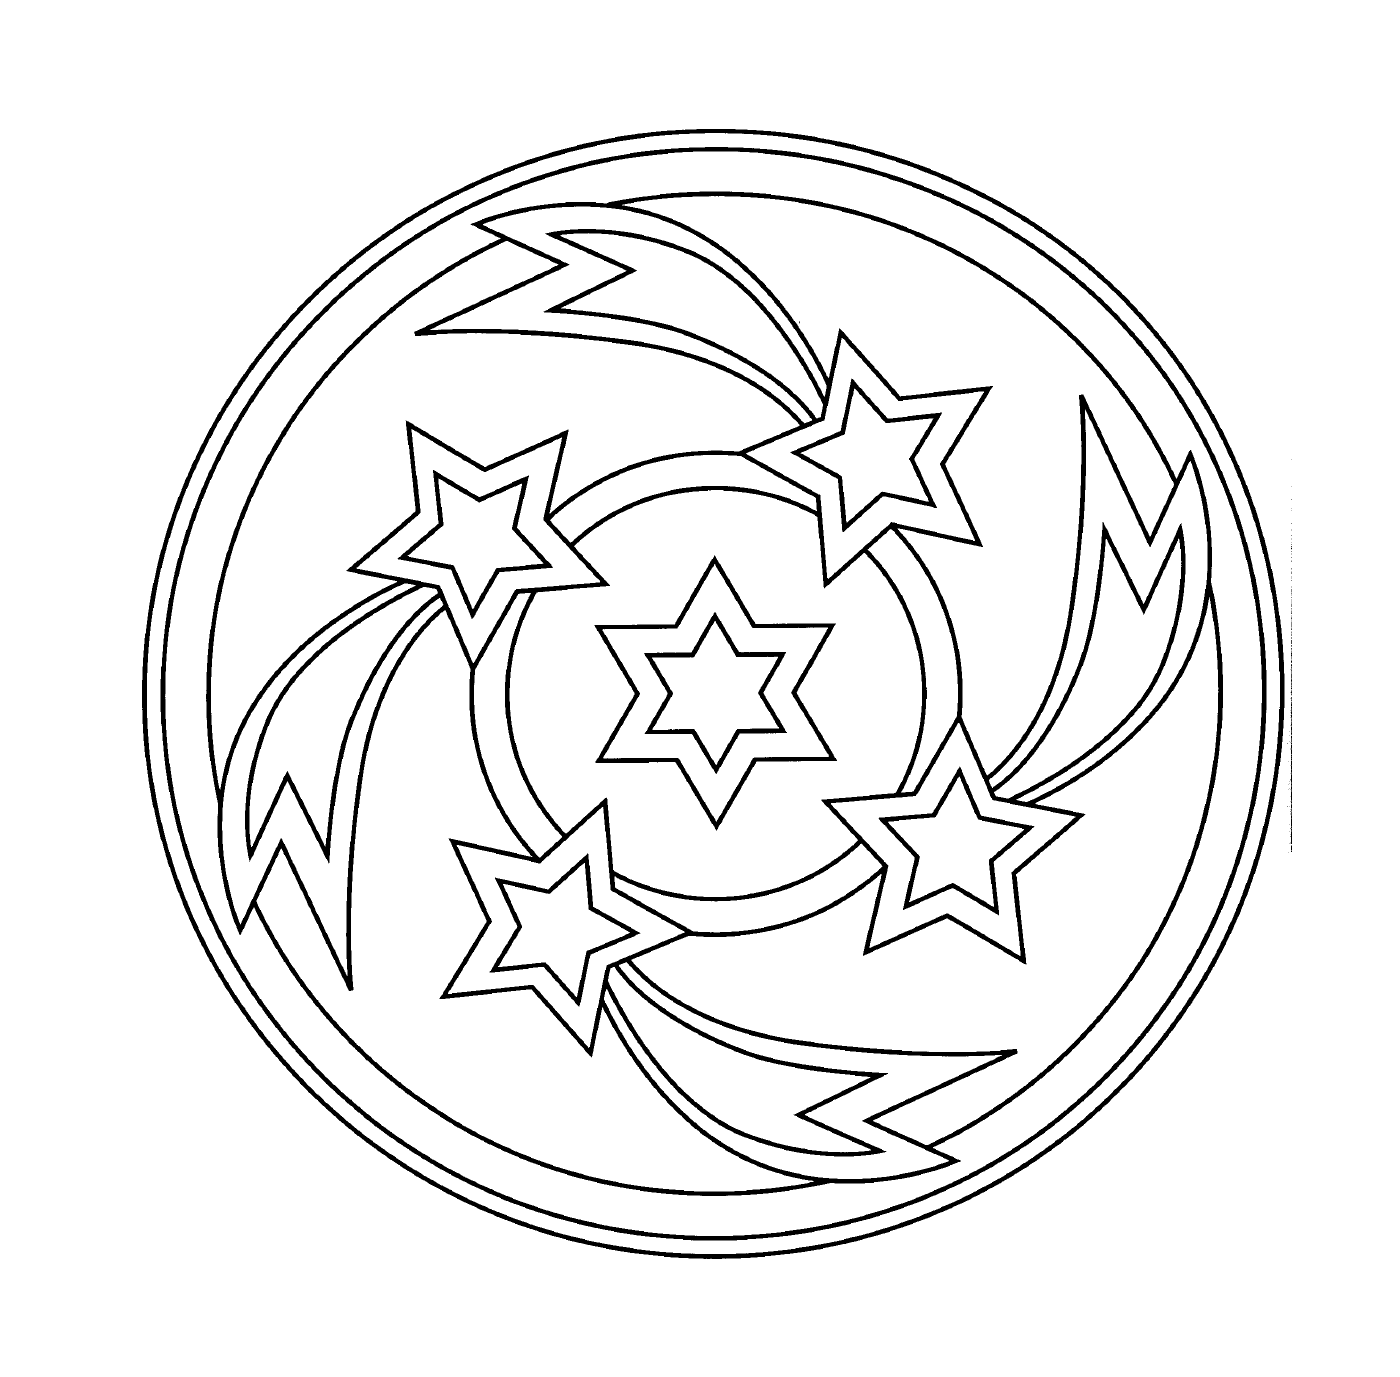  Spinning star in a mandala 